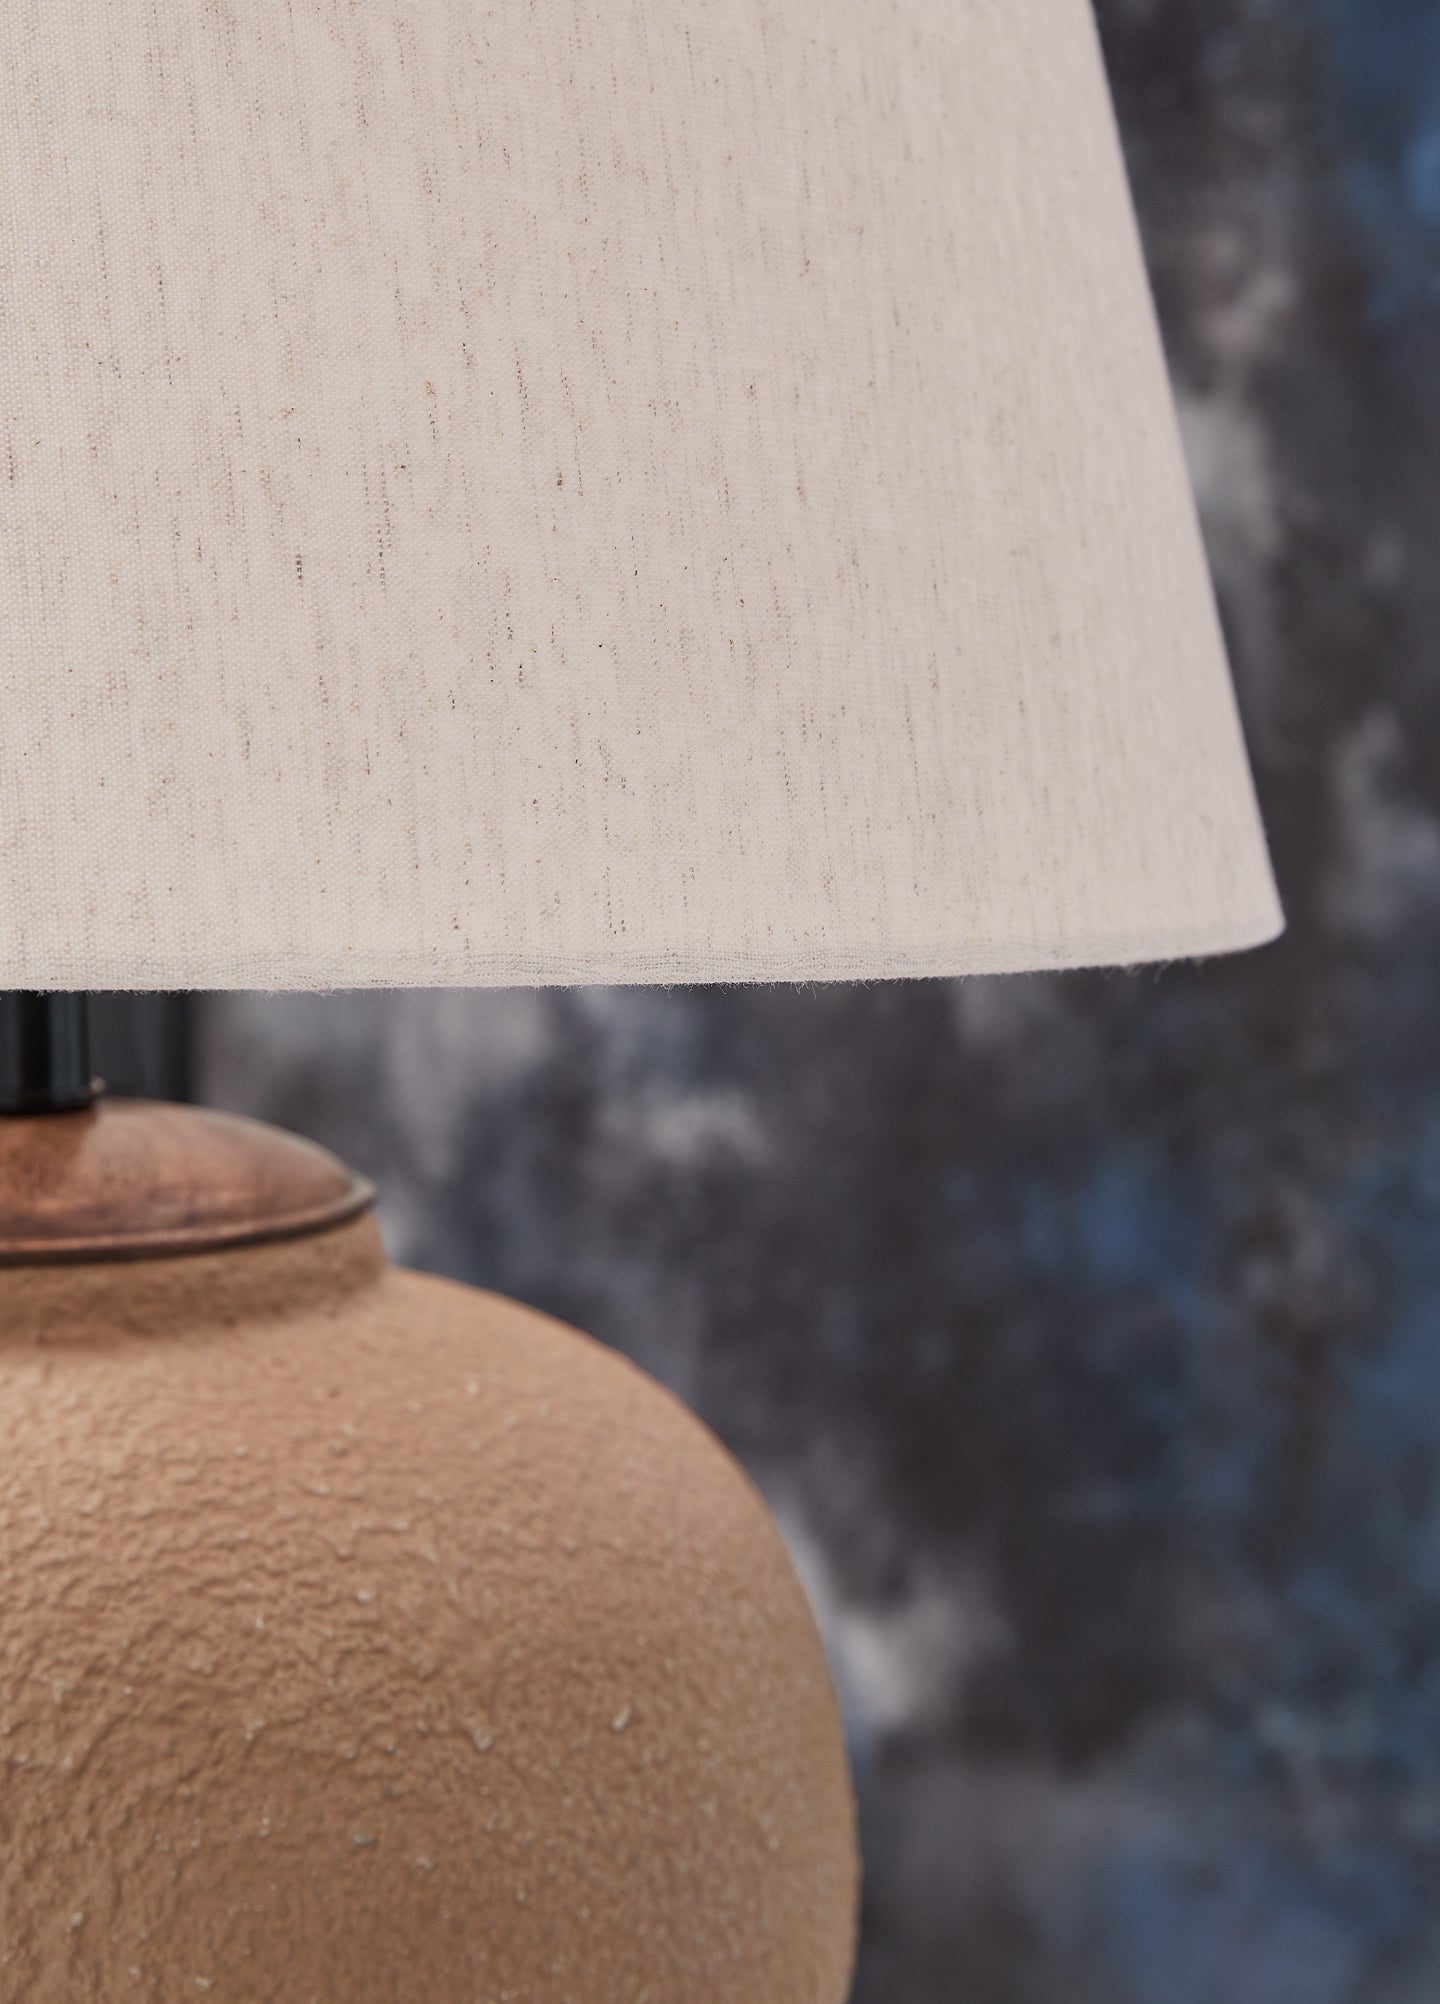 Scantor Metal Table Lamp (1/CN) at Cloud 9 Mattress & Furniture furniture, home furnishing, home decor